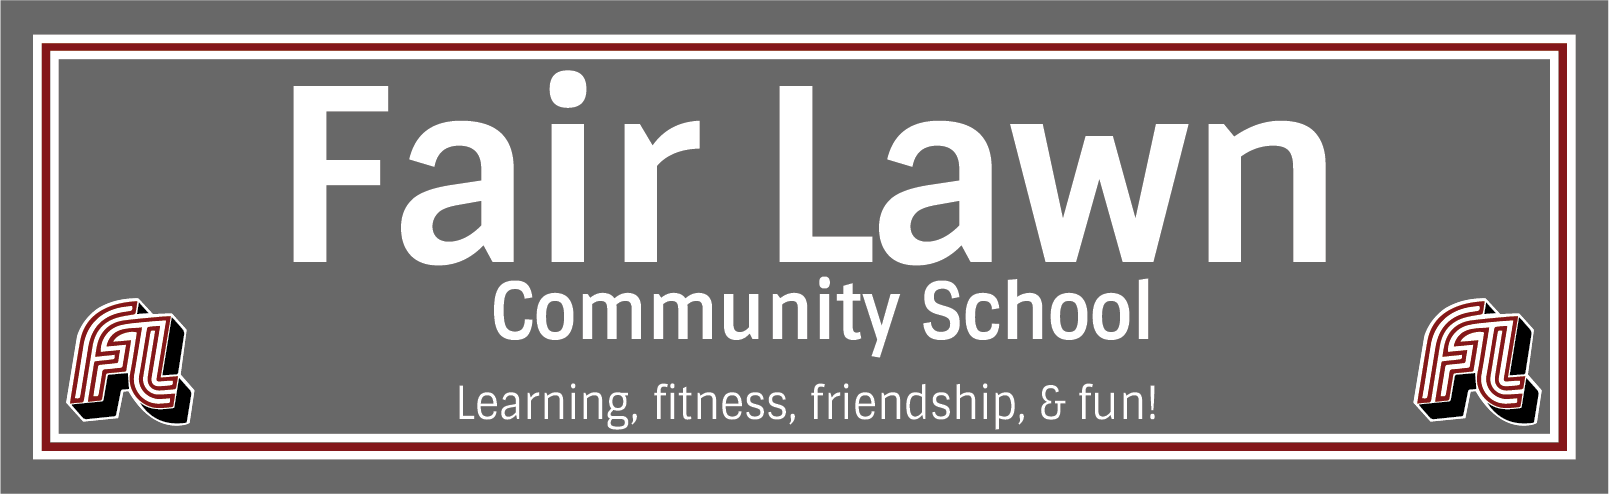 Community School logo